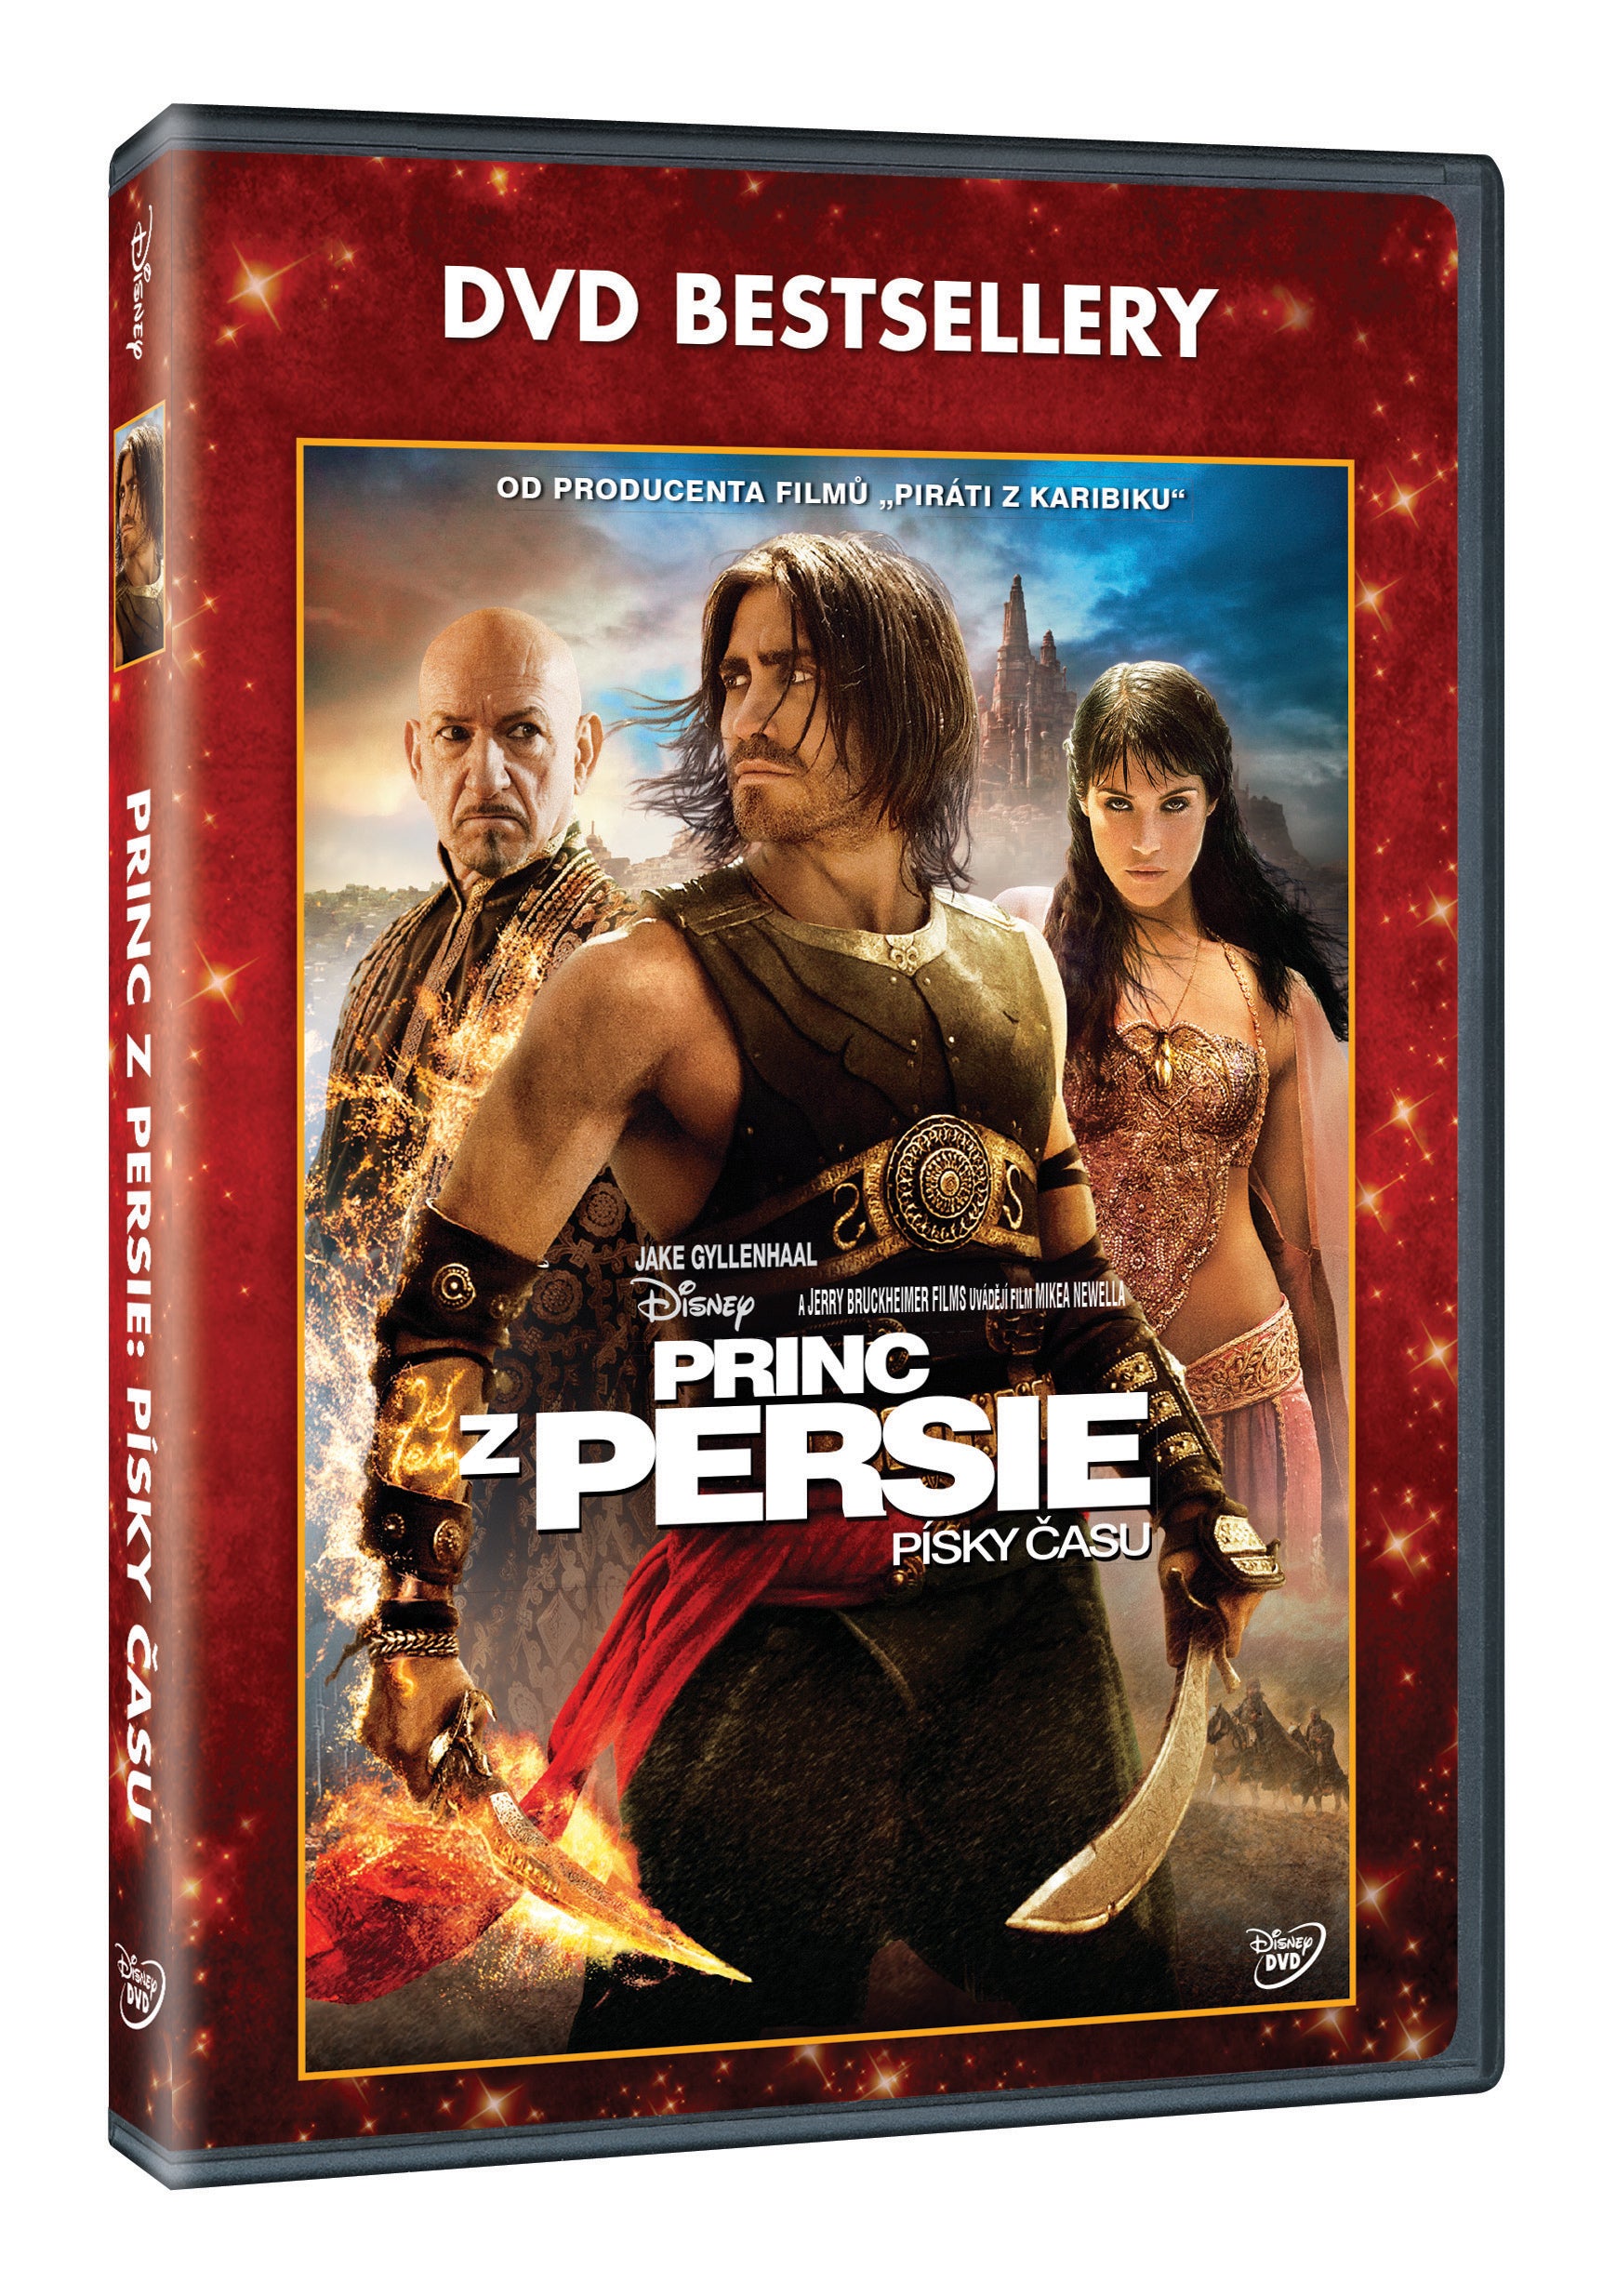 Princ z Persie: Pisky casu - DVD bestsellery (Prince Of Persia: The Sands Of Time)